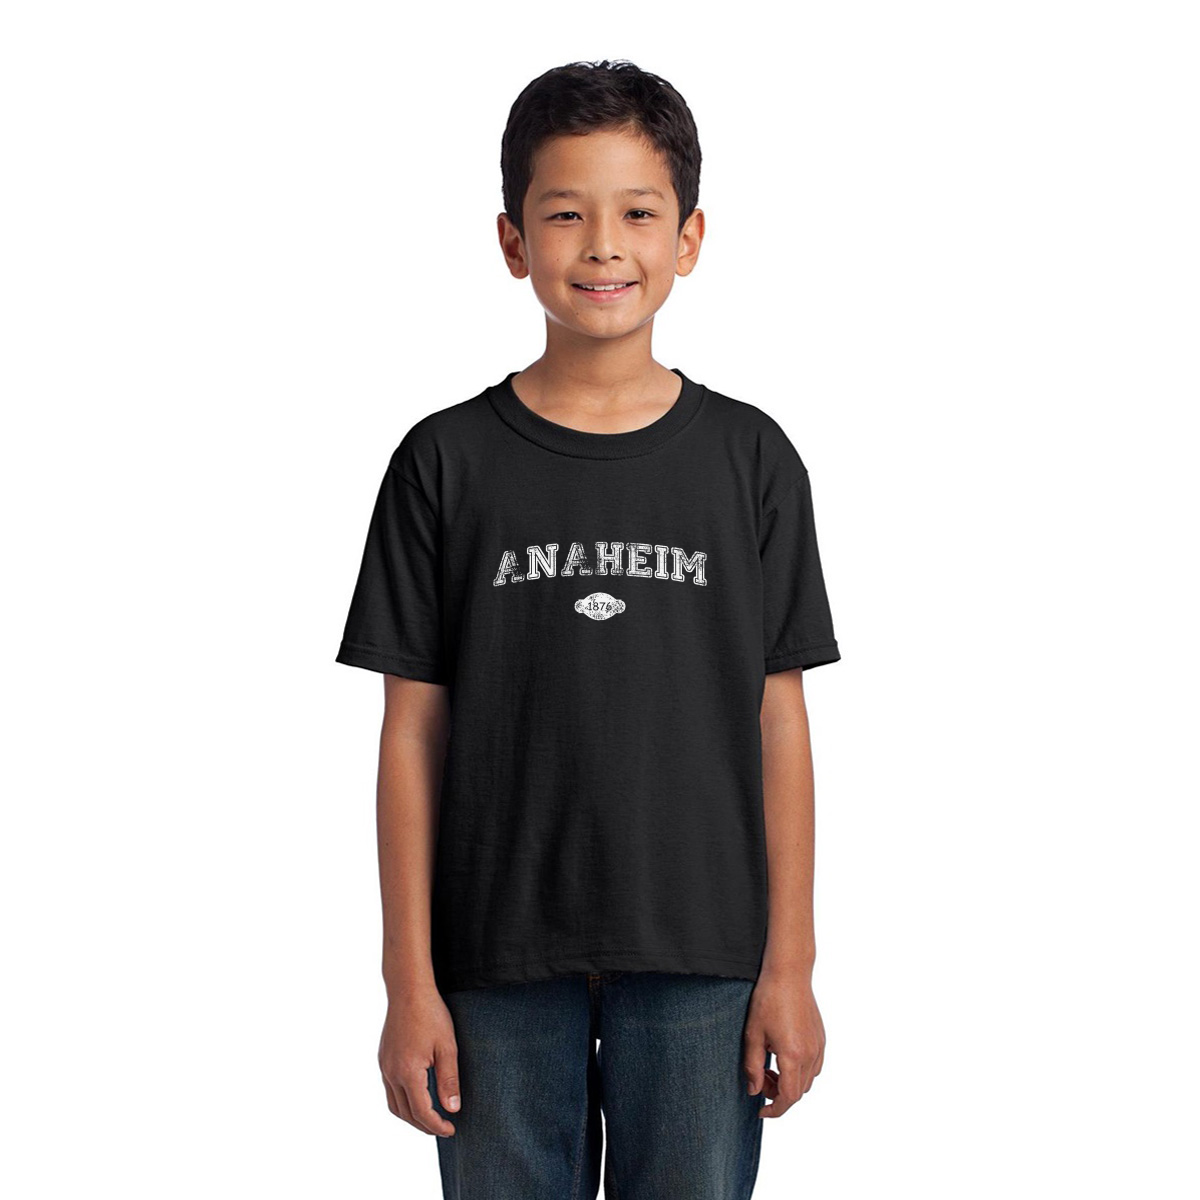 Anaheim 1876 Toddler T-shirt | Black